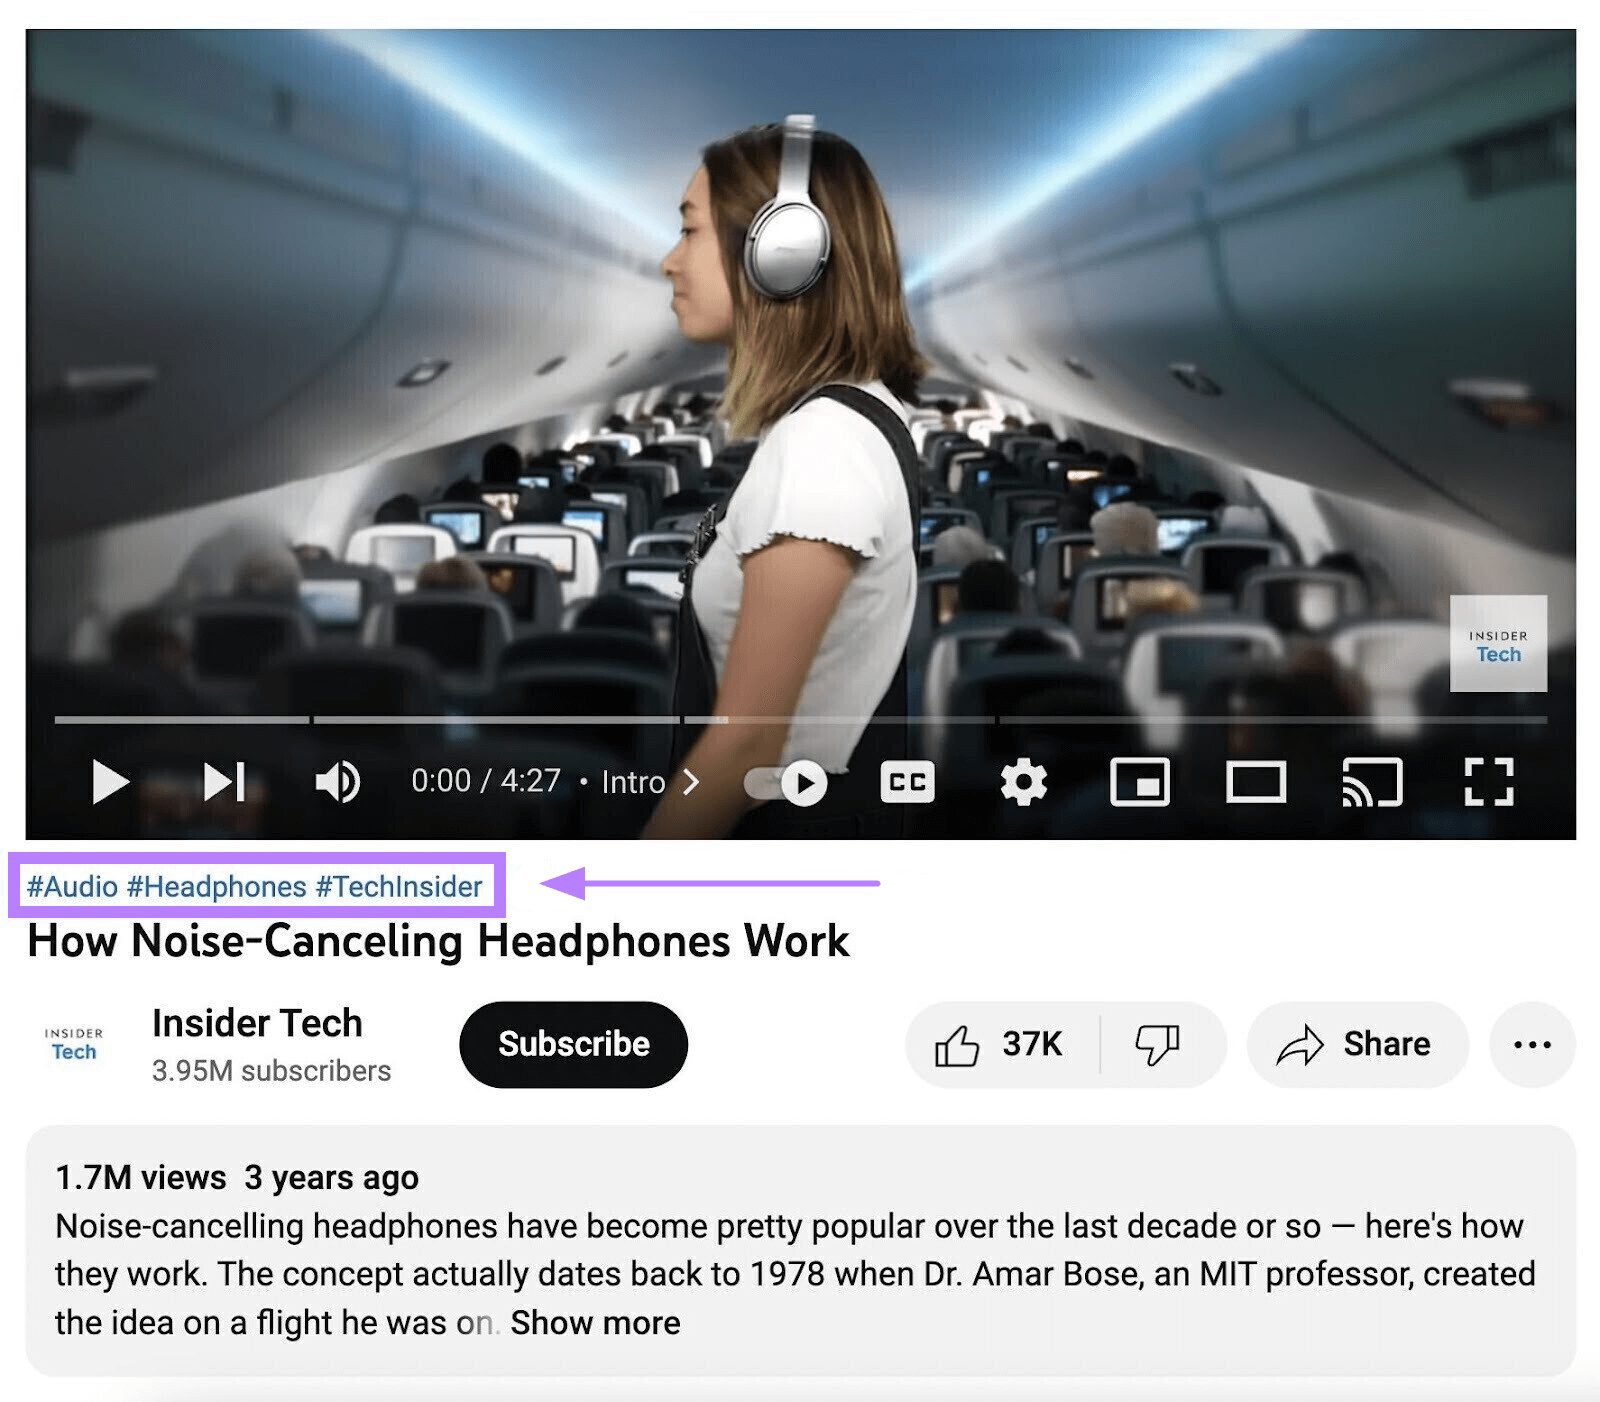 example of hashtags #audio #headphones #techinsider for "How Noise-Canceling Headphones Work" Youtube video